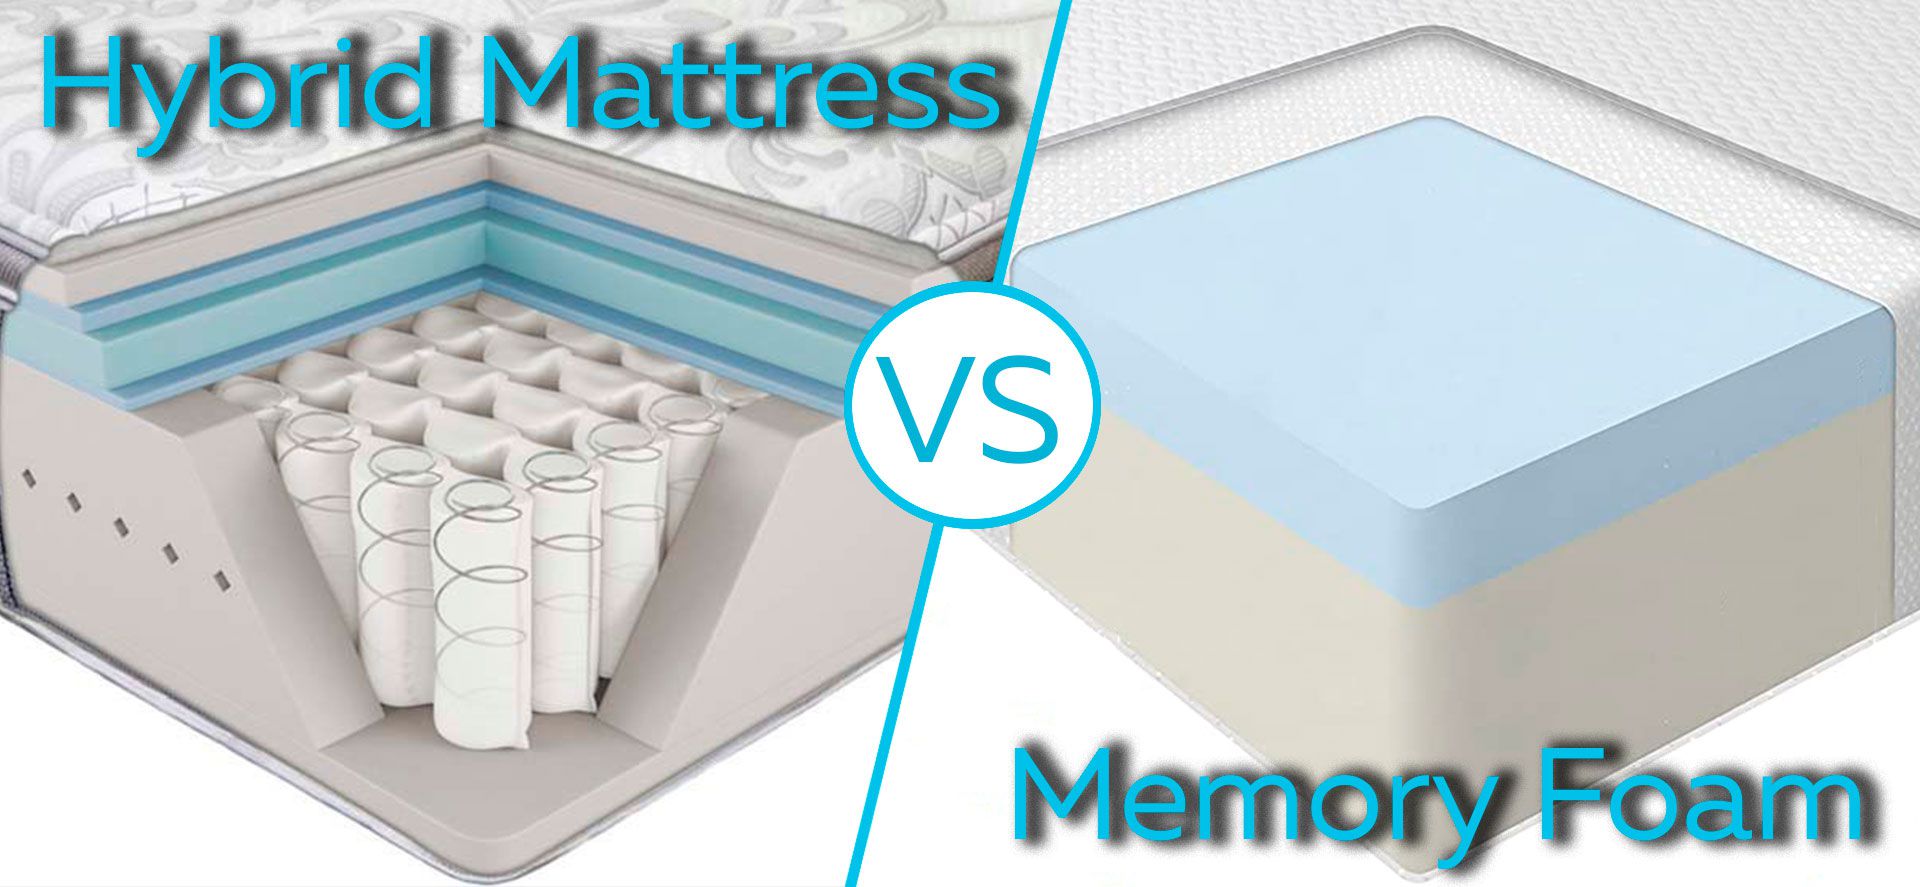 Comparison of hybrid mattress and memory foam mattress.